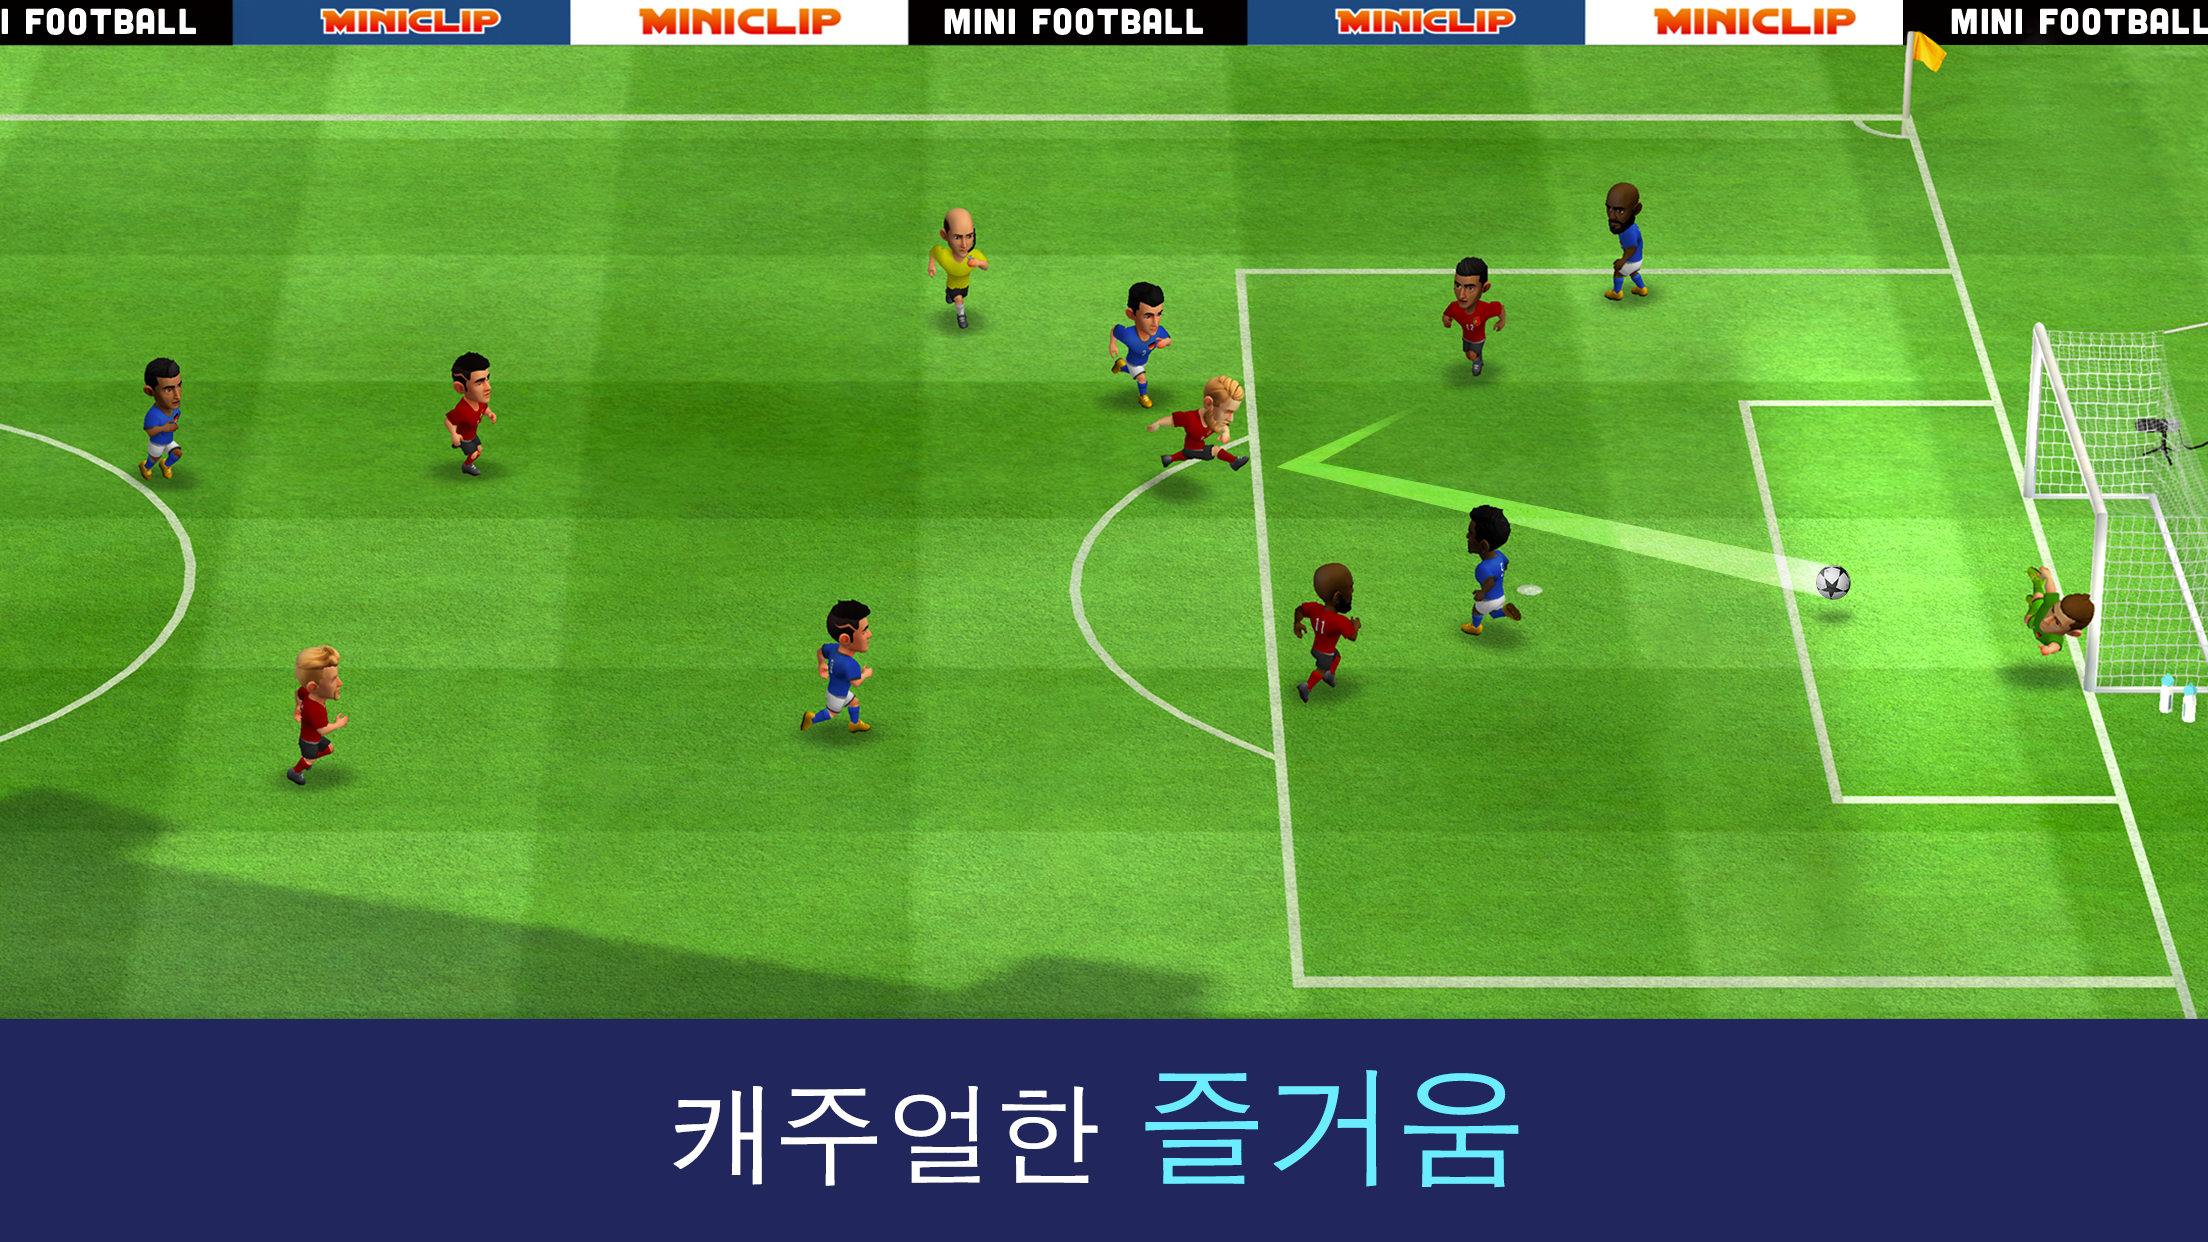 Screenshot 1 of Mini Football 3.1.0